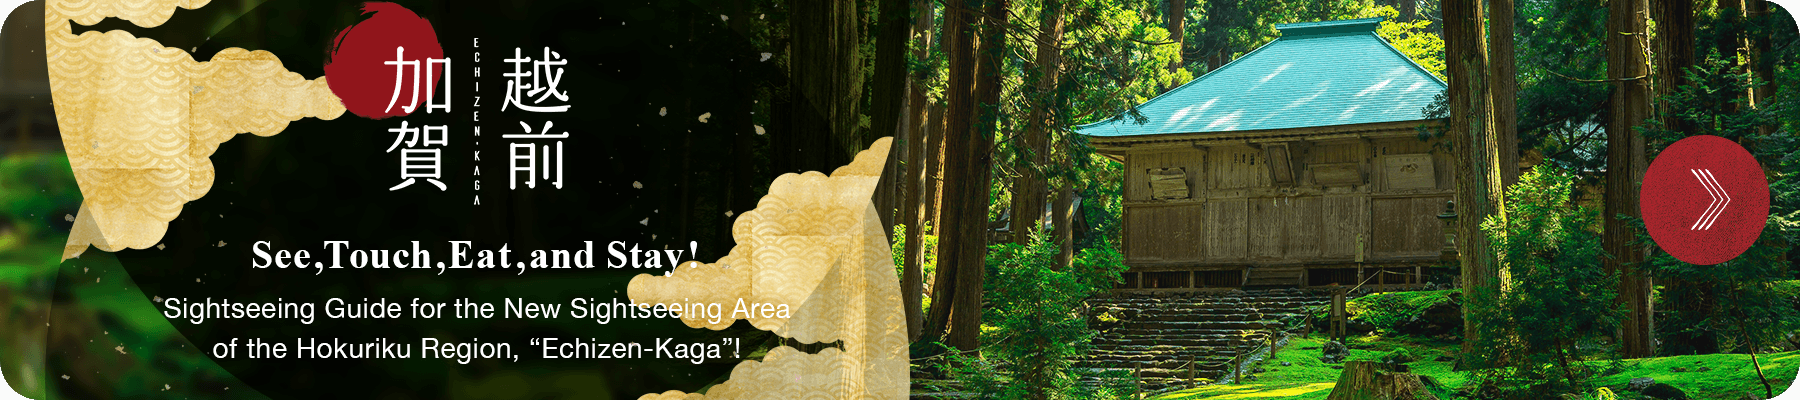 Sightseeing Guide for the New Sightseeing Area of the Hokuriku Region, “Echizen-Kaga”!